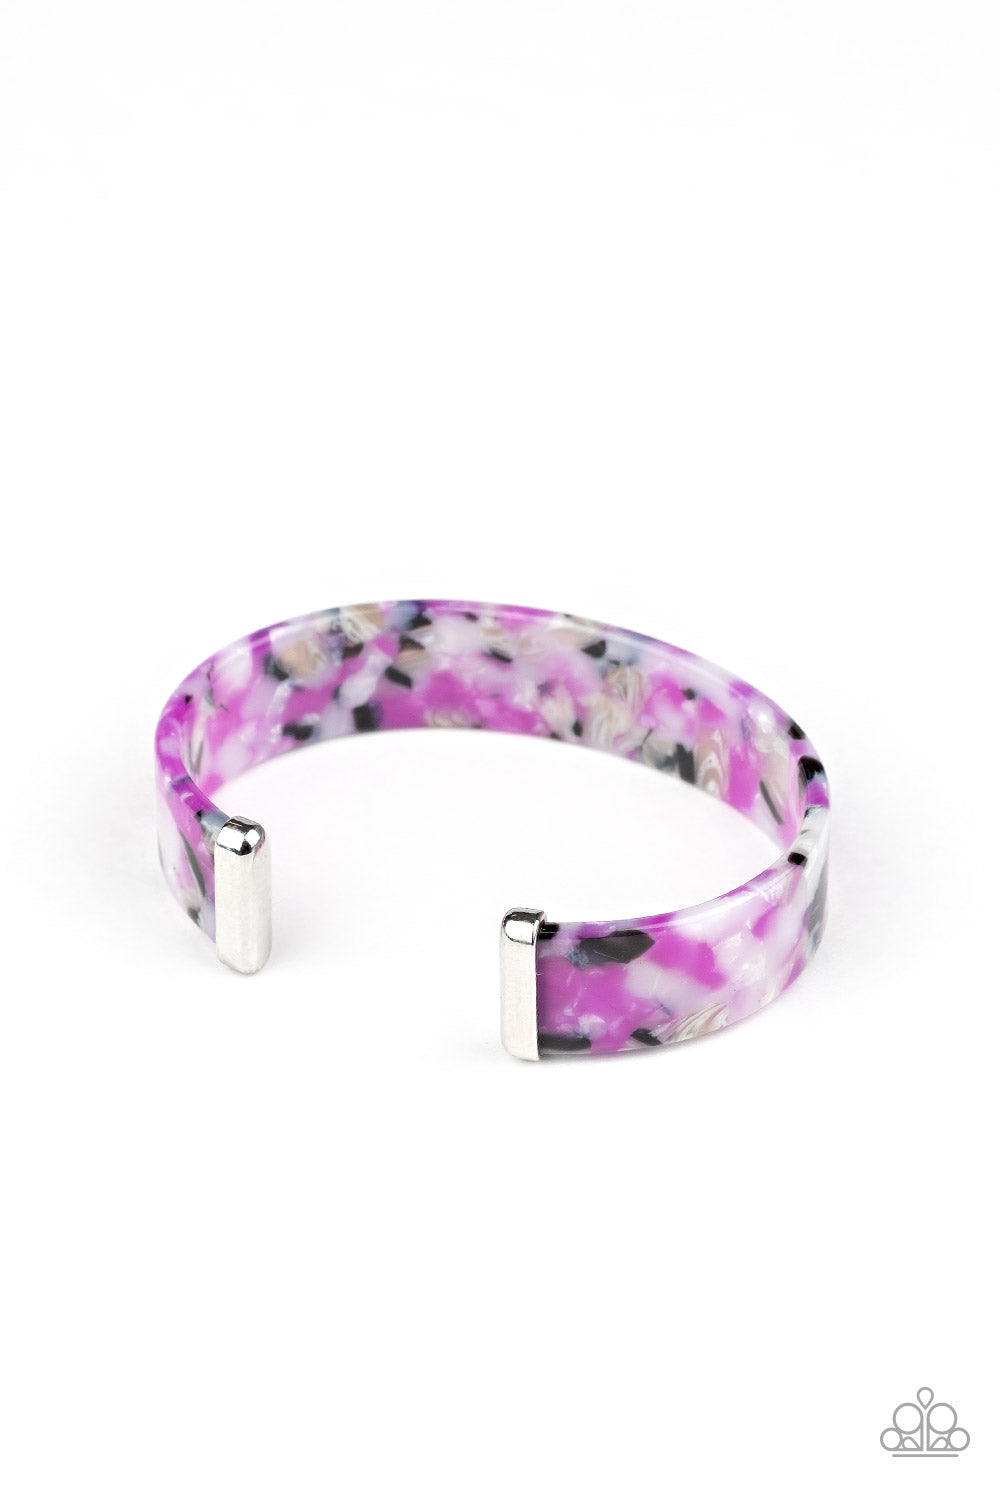 five-dollar-jewelry-its-getting-haute-in-here-purple-bracelet-paparazzi-accessories